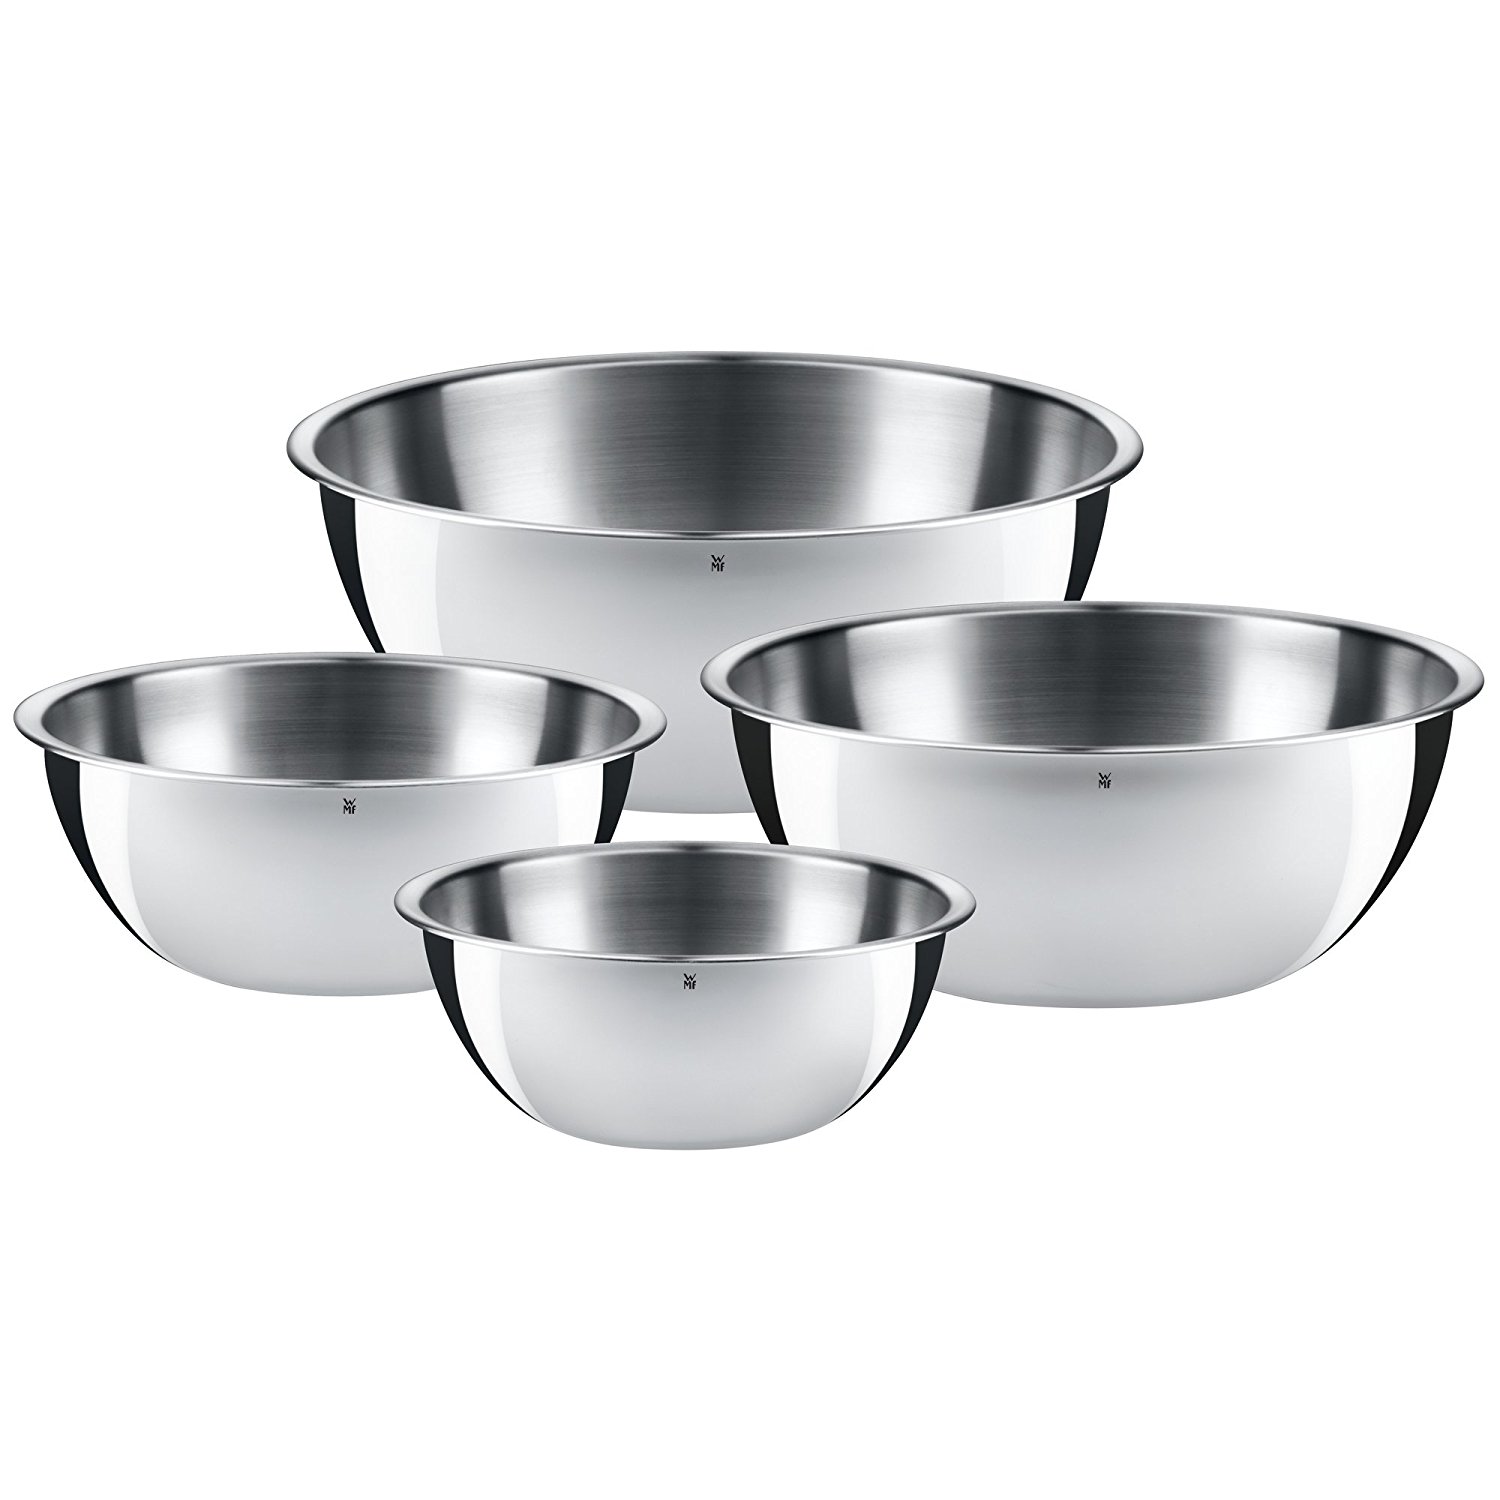 Set 4 bowls WMF in stainless steel Cromargan